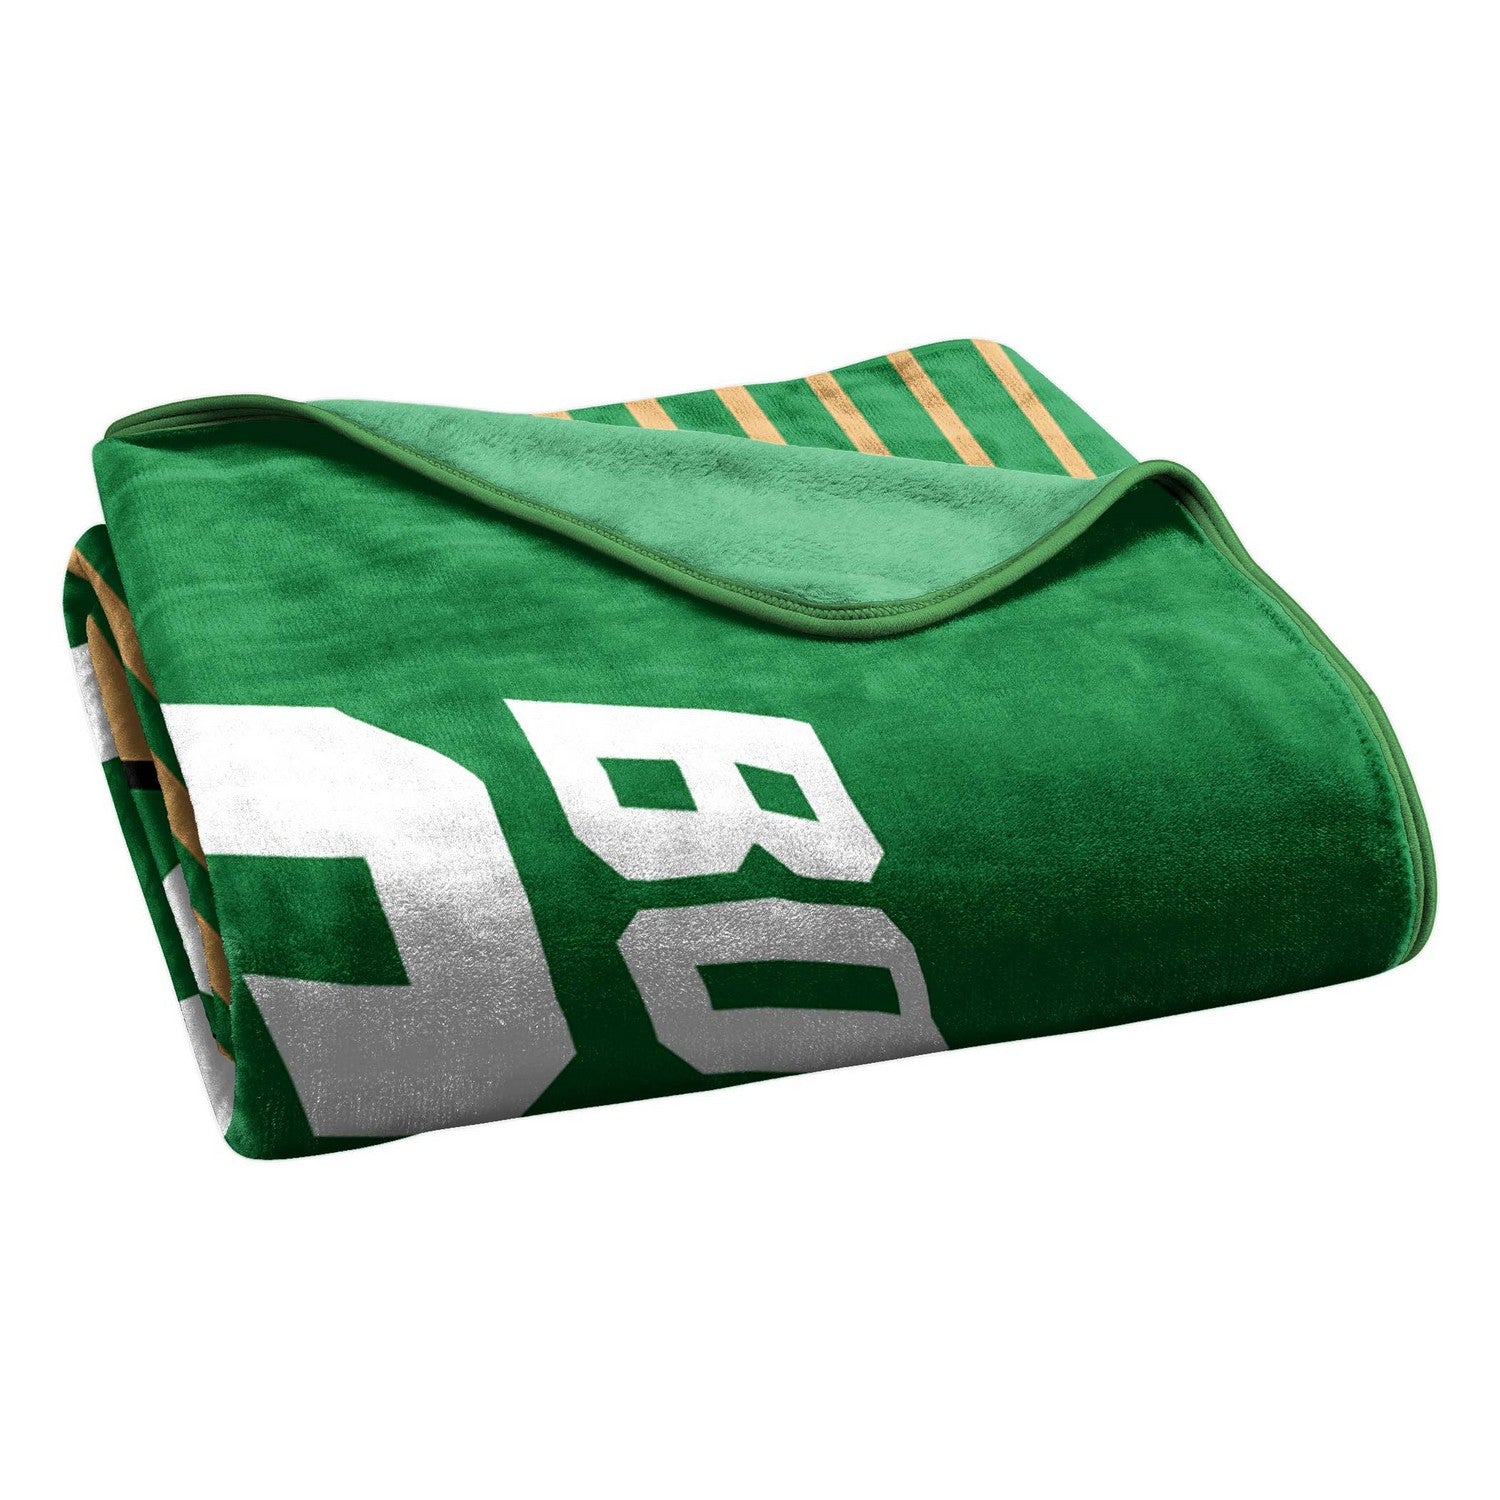 NBA Raschel Throw Blanket Boston Celtics Folded